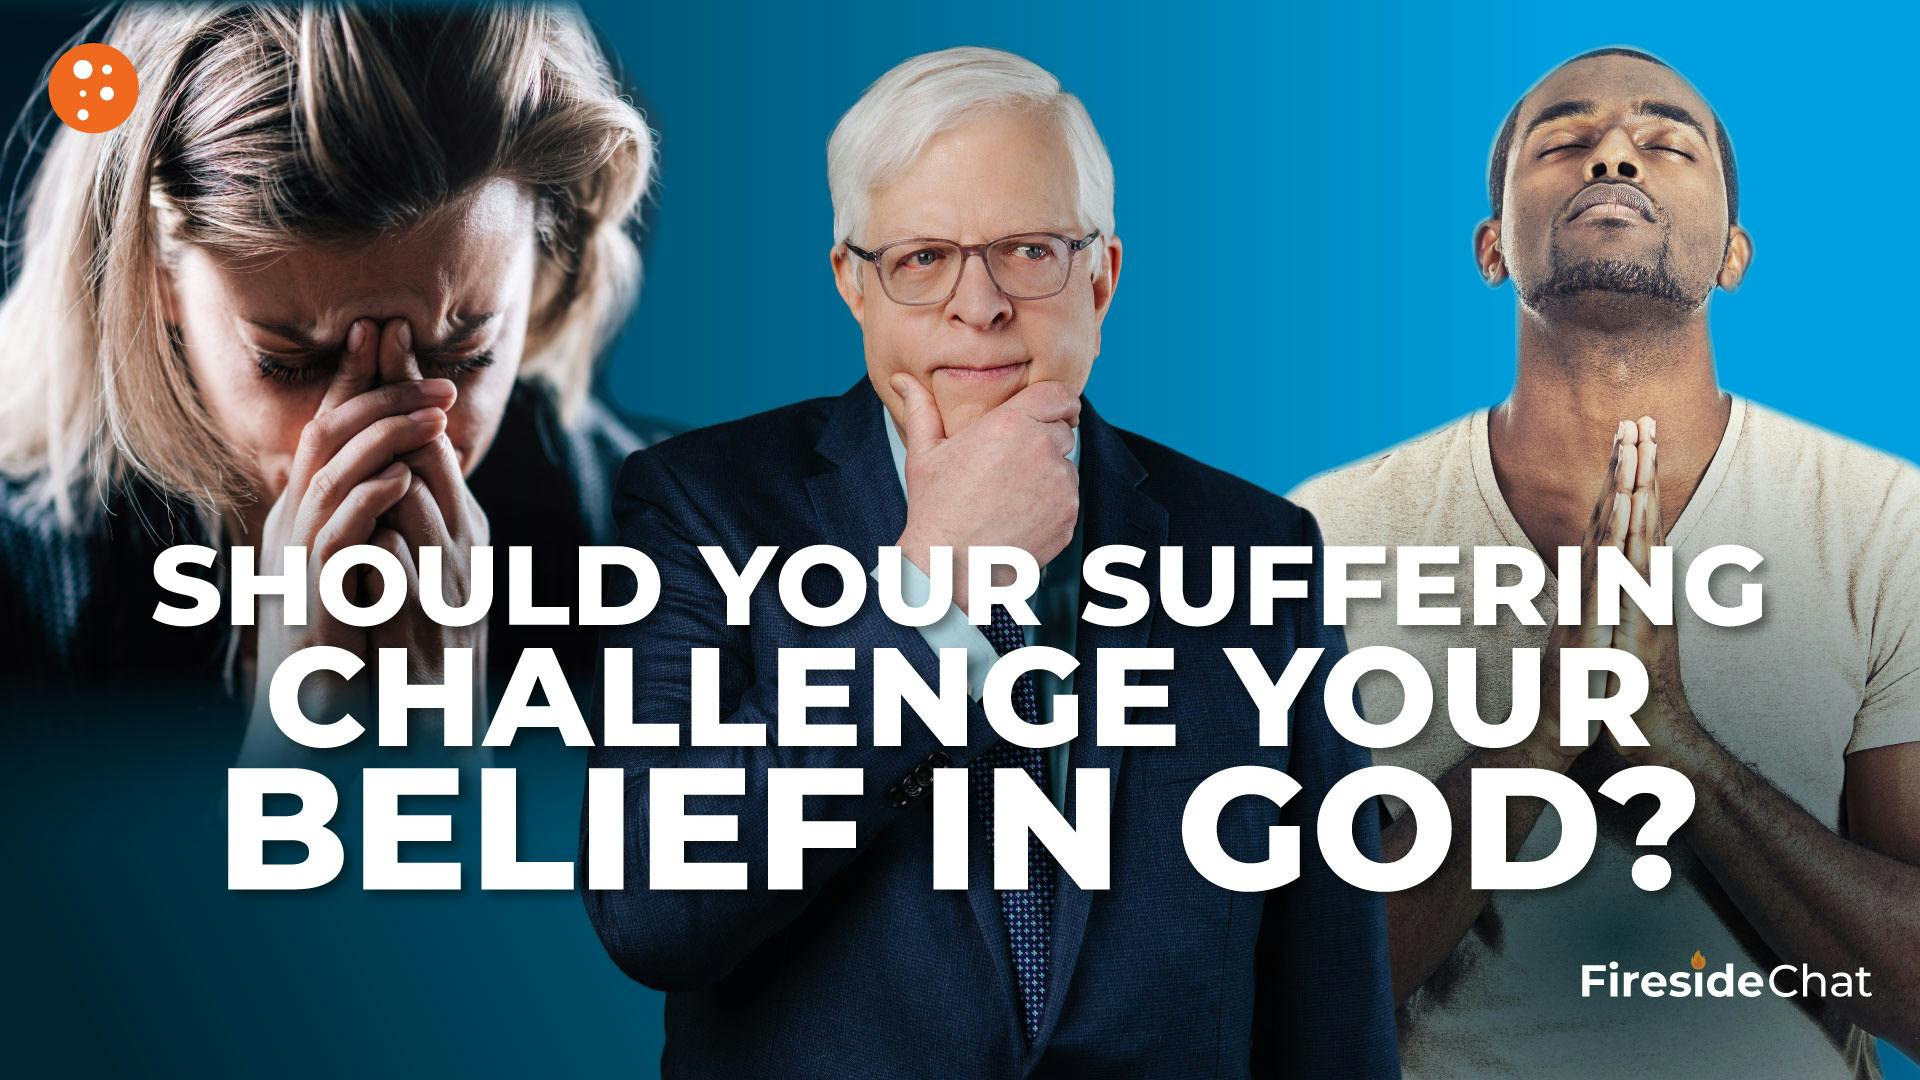 Should Your Suffering Challenge Your Belief in God?